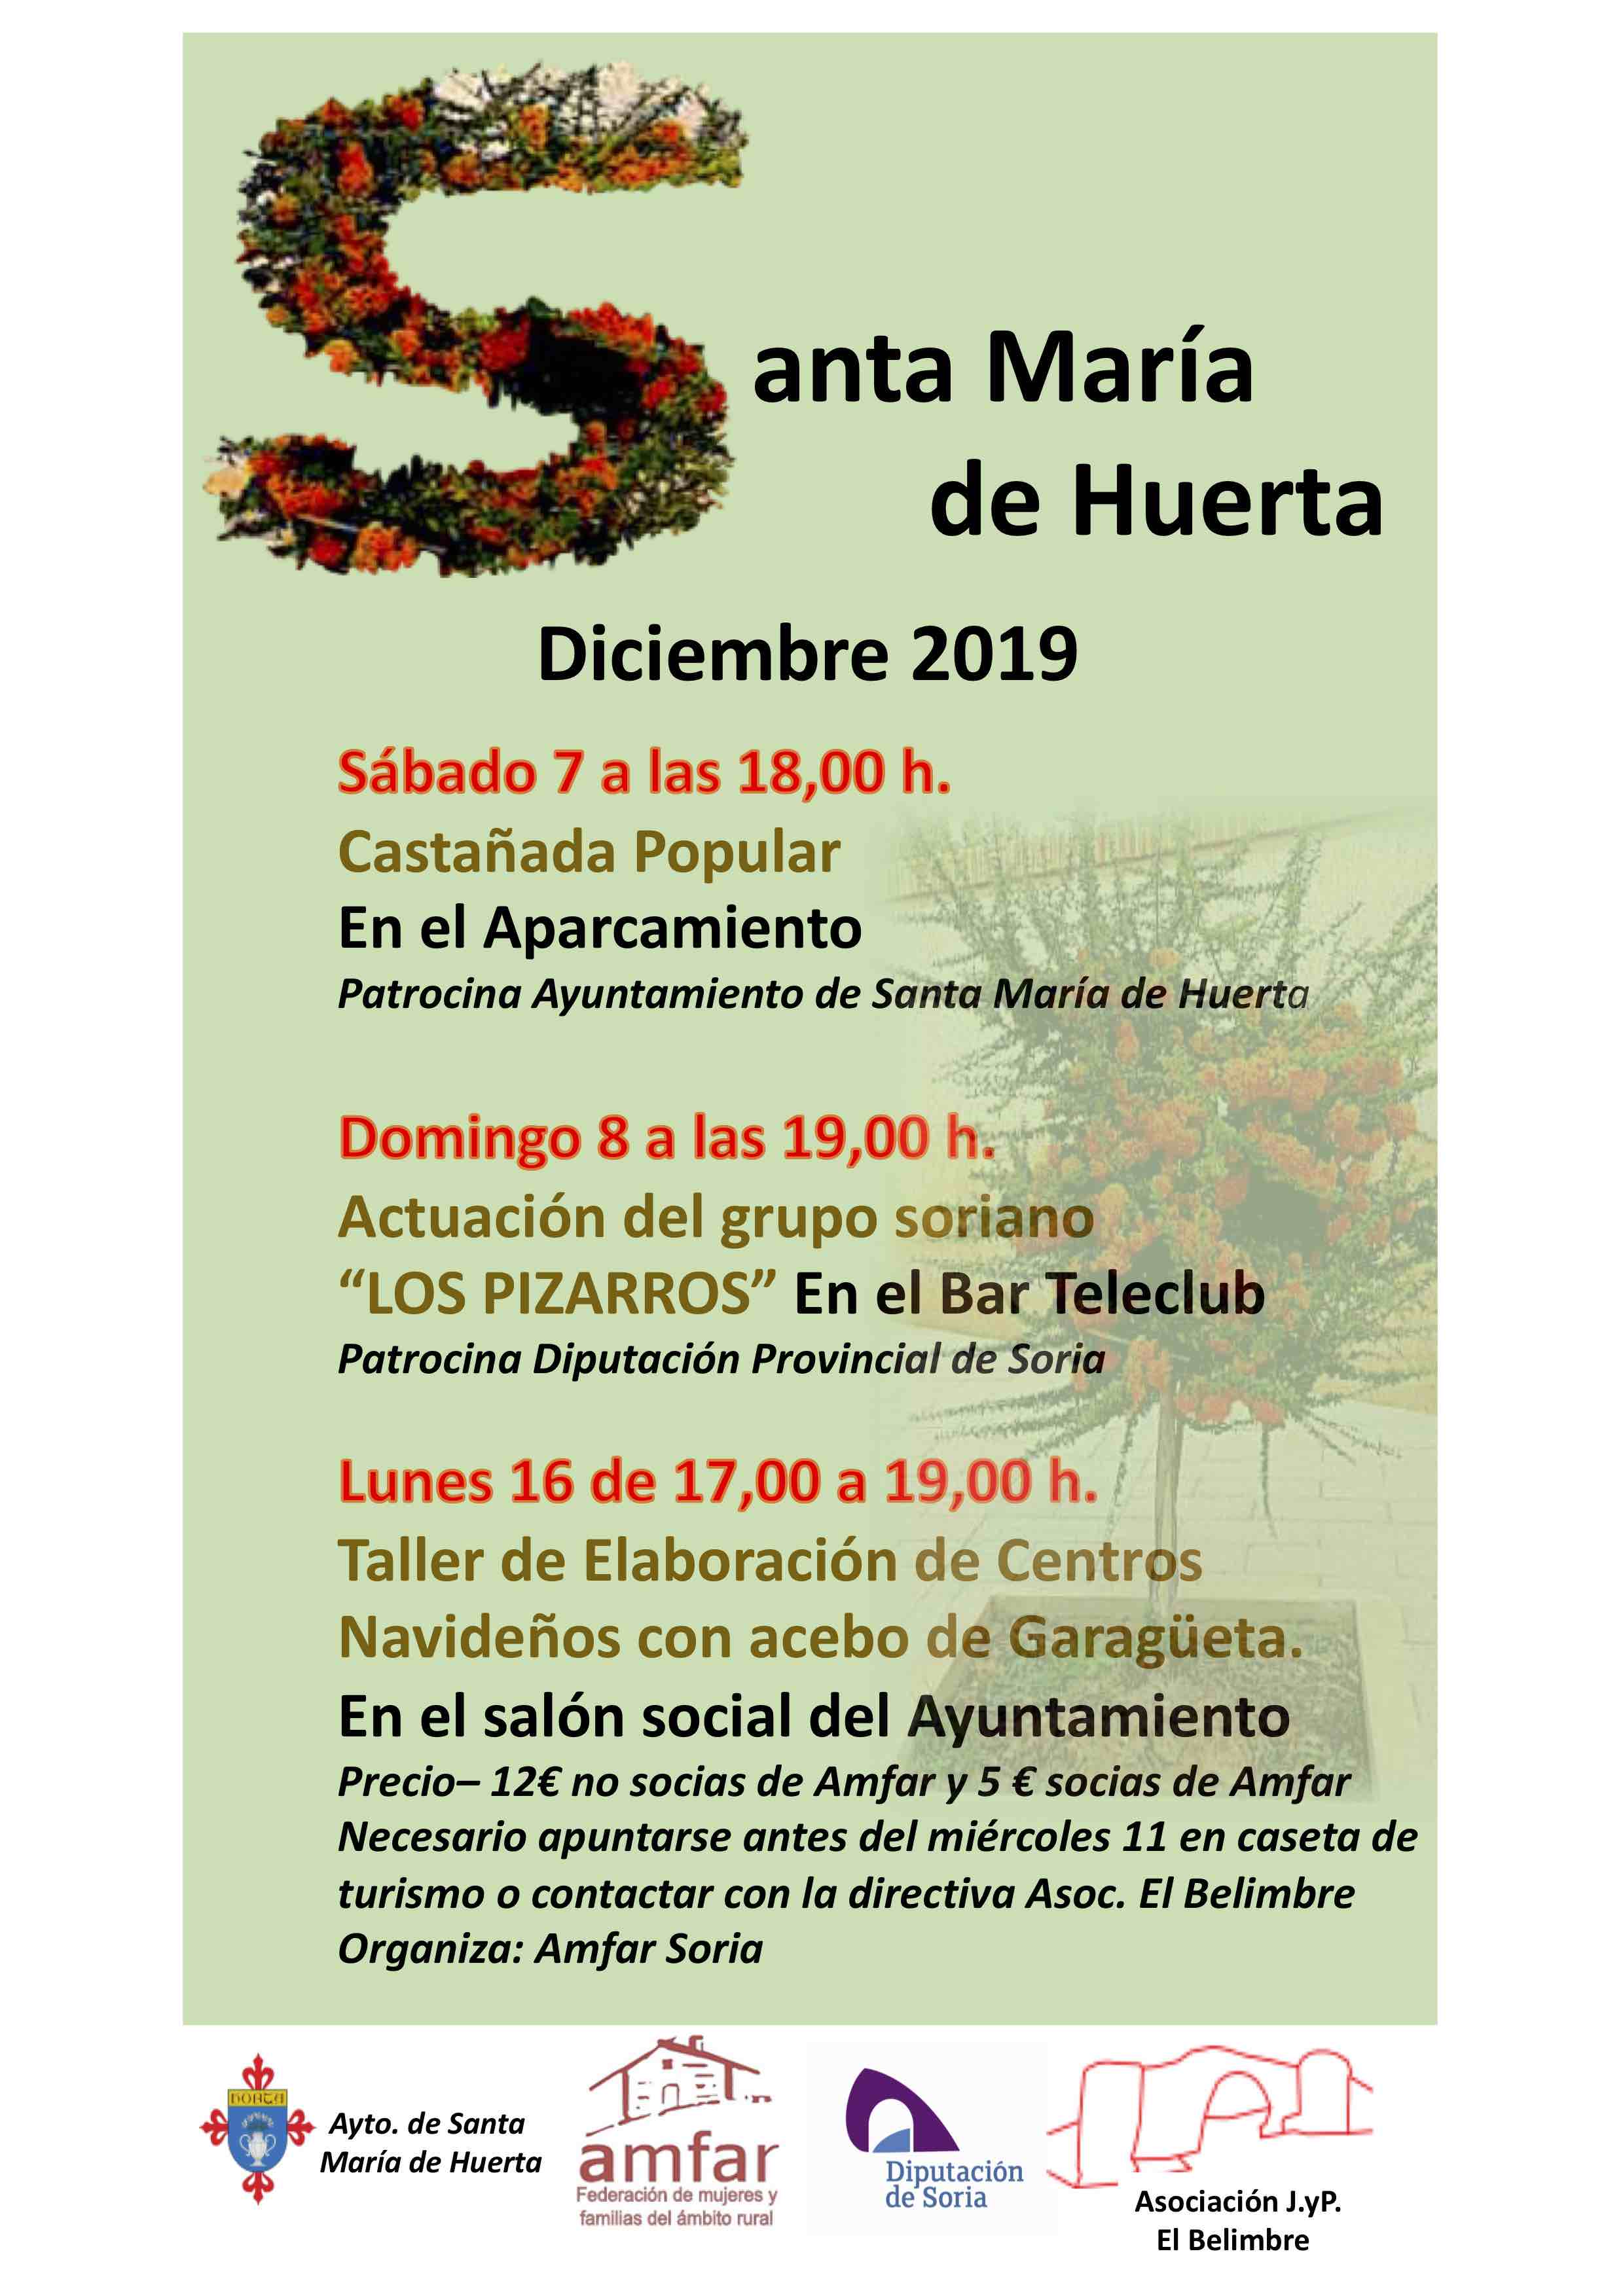 Diciembre 2019-Actividades en Santa María de Huerta